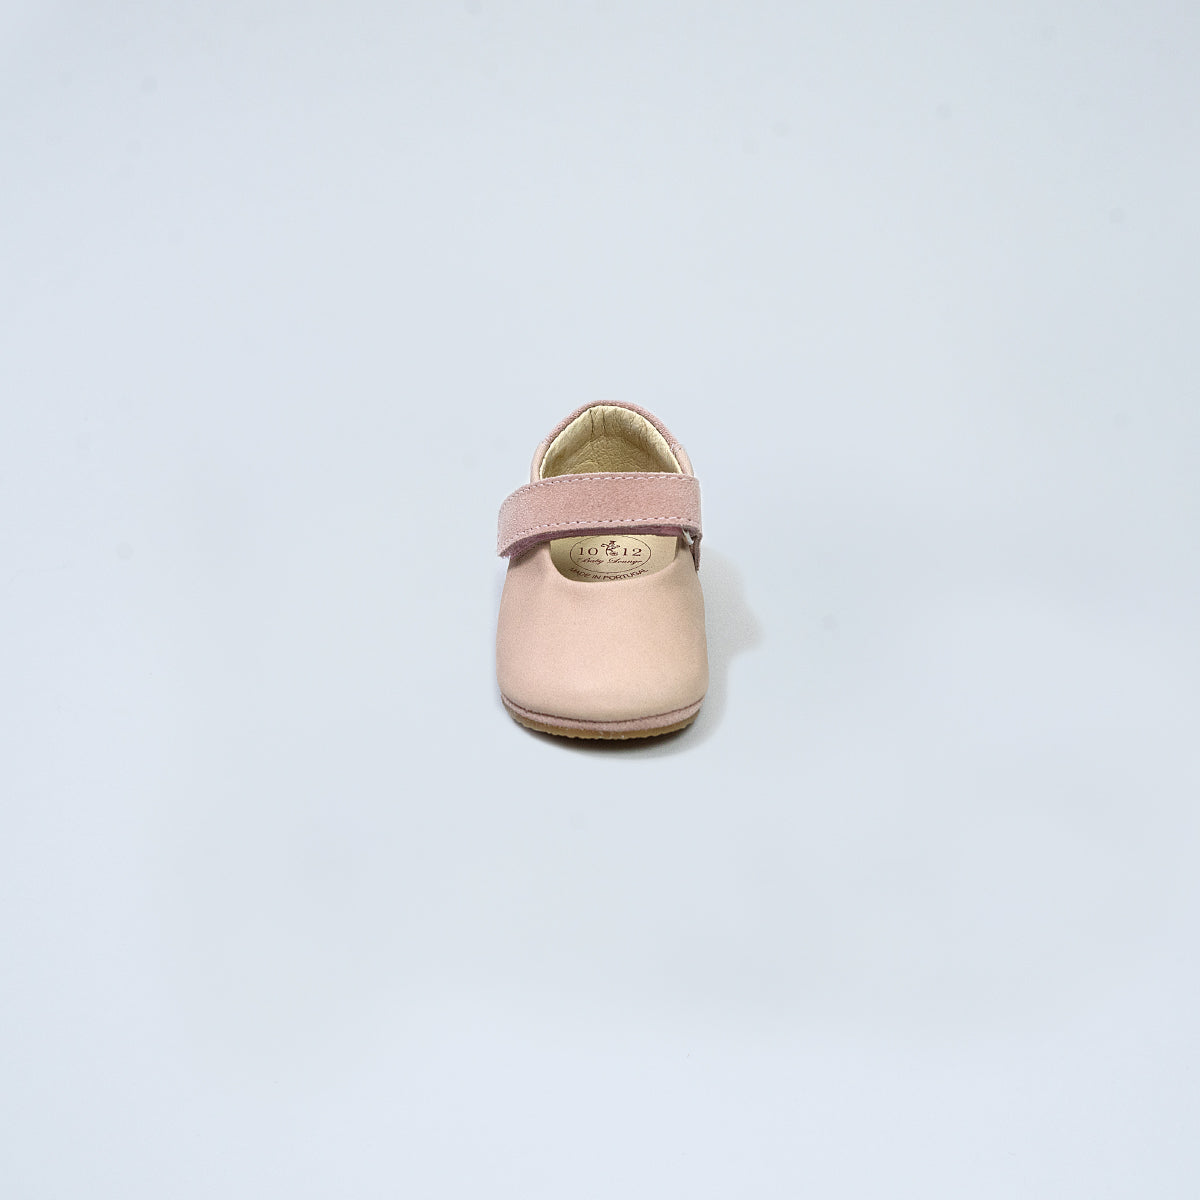 Baby Ballerina Flats - Nude - Front View